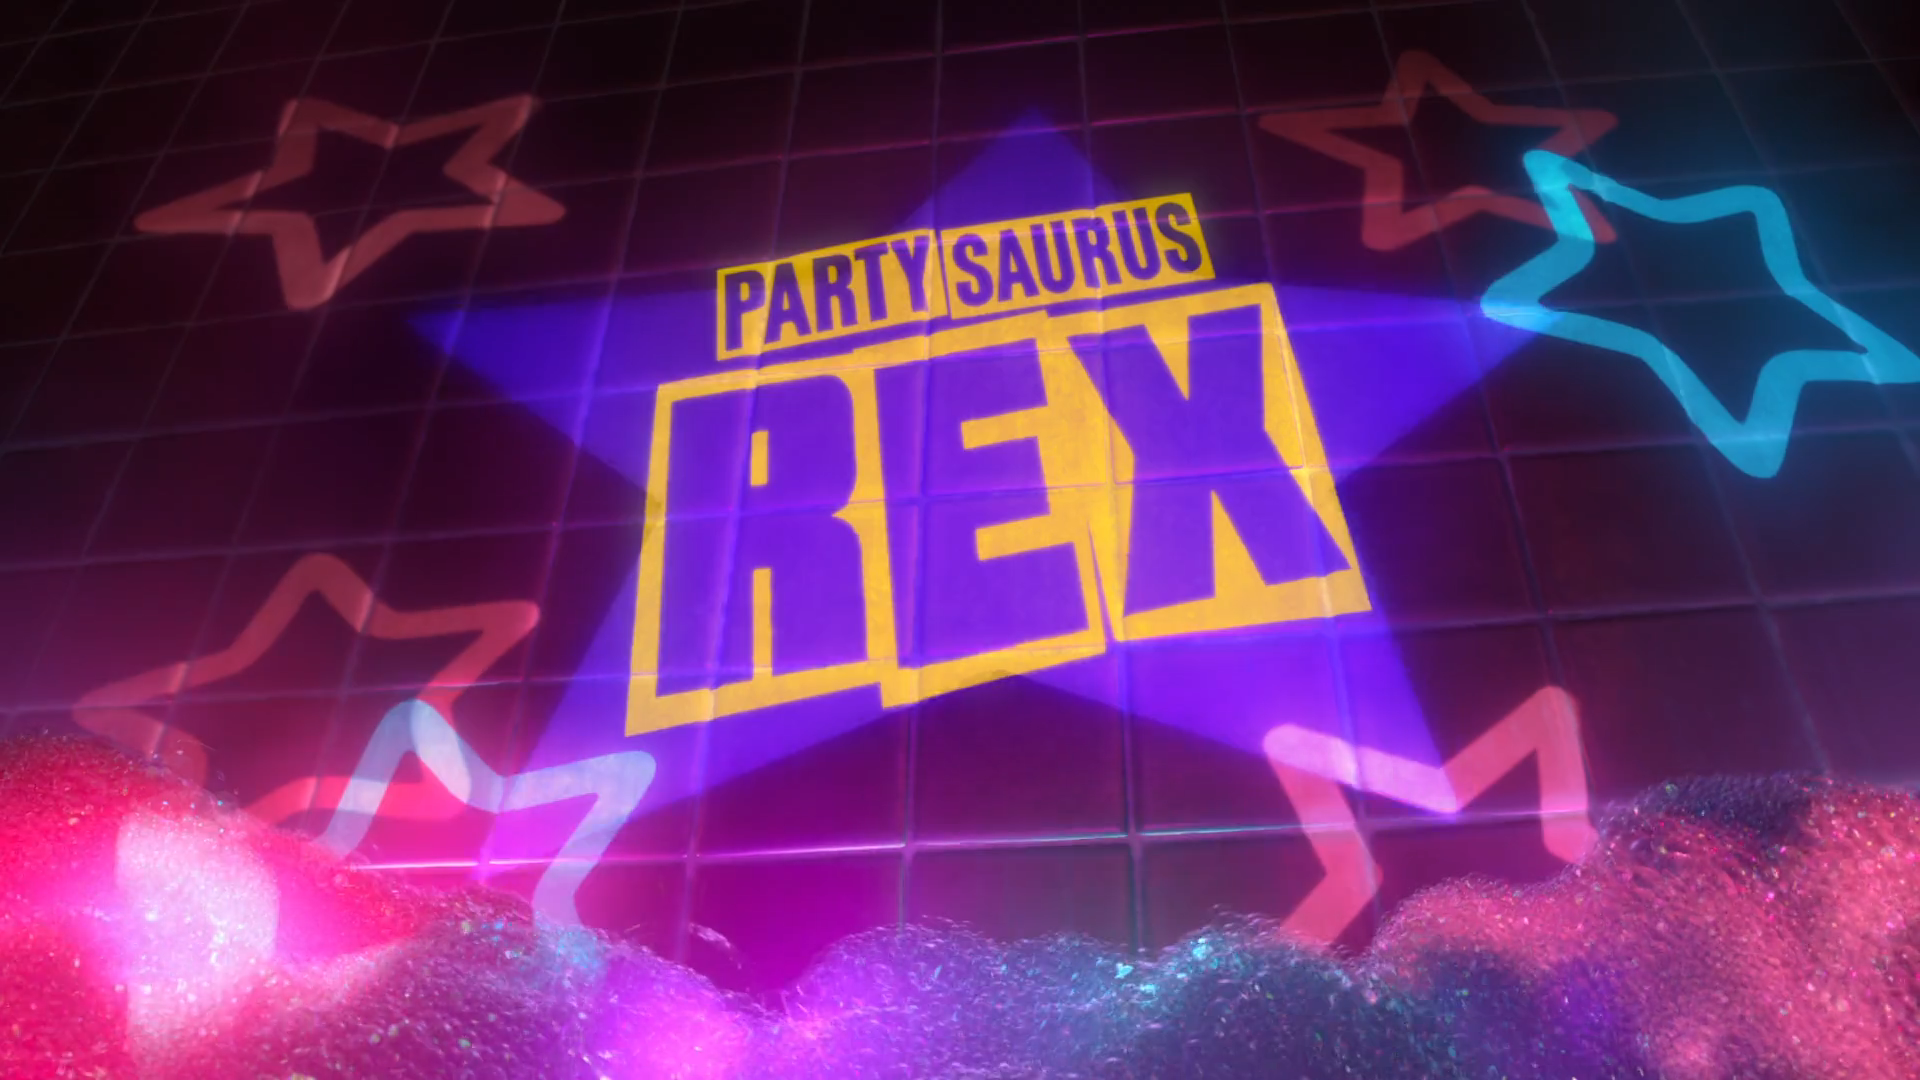 Partysaurus Rex #16